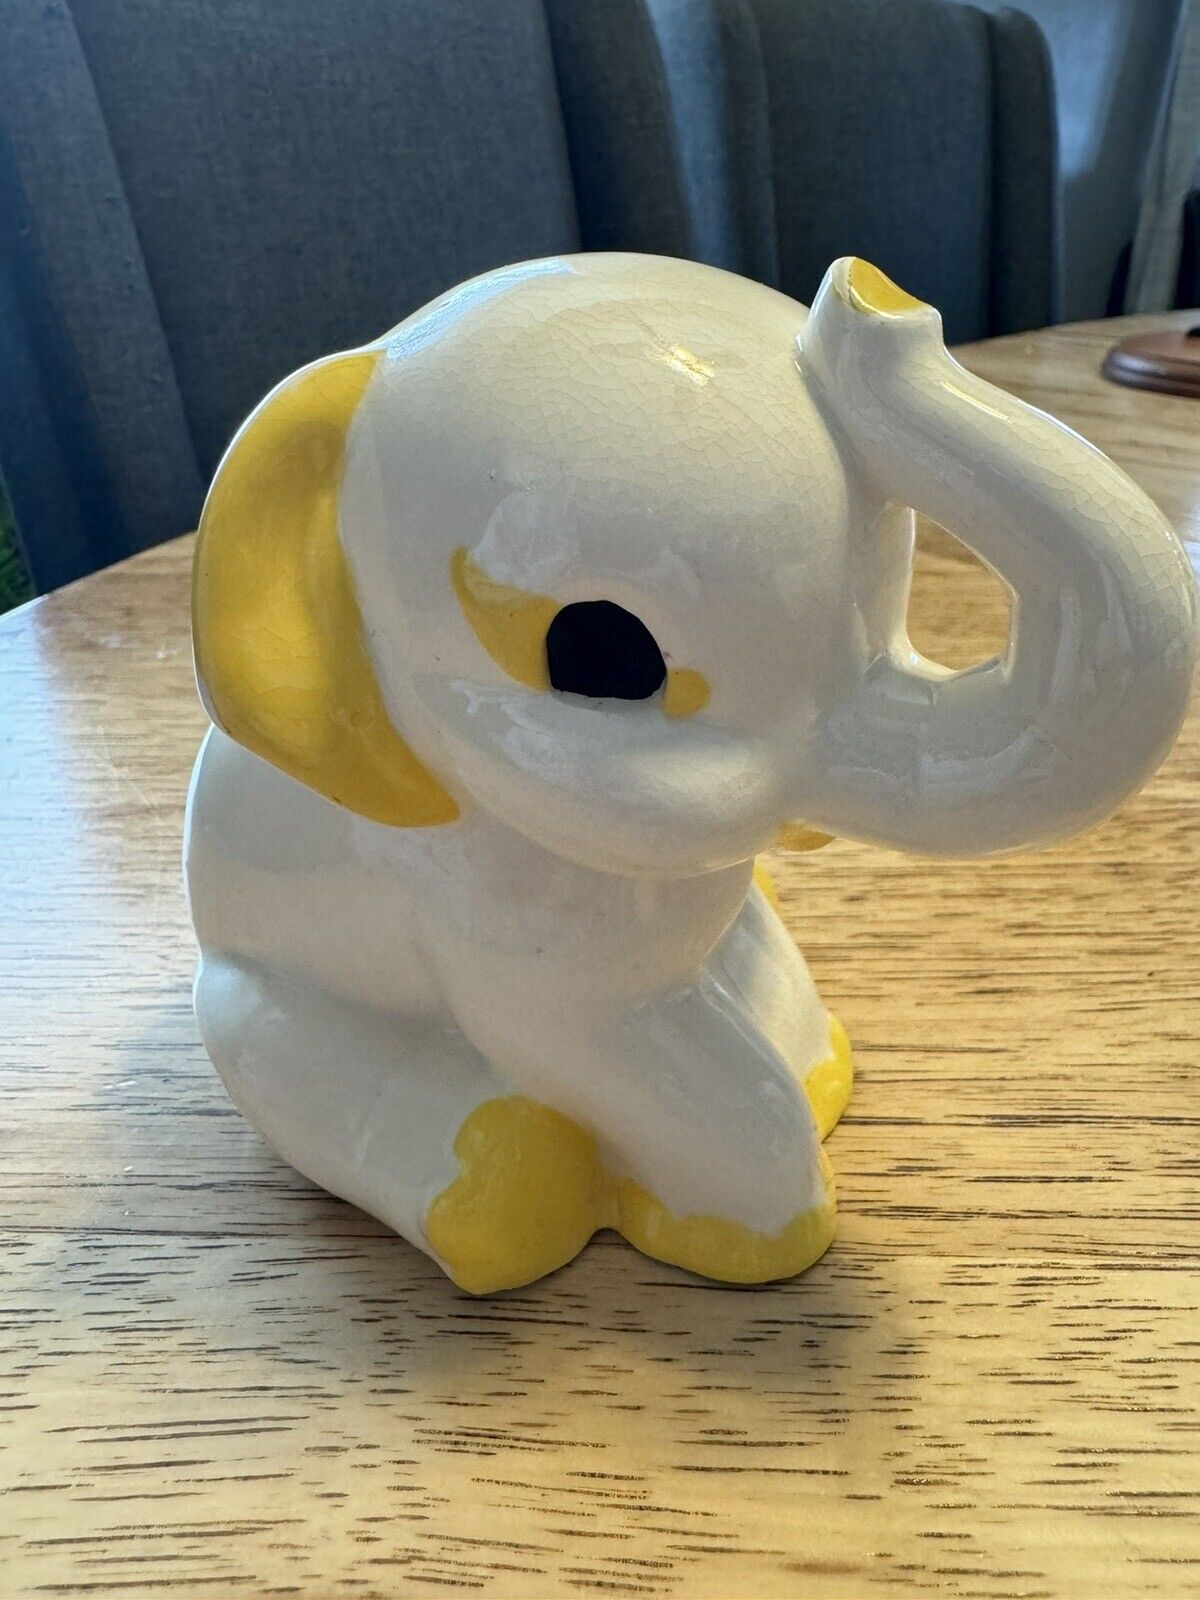 Vintage Ceramic Elephant Figurine 5”x4” White And Yellow